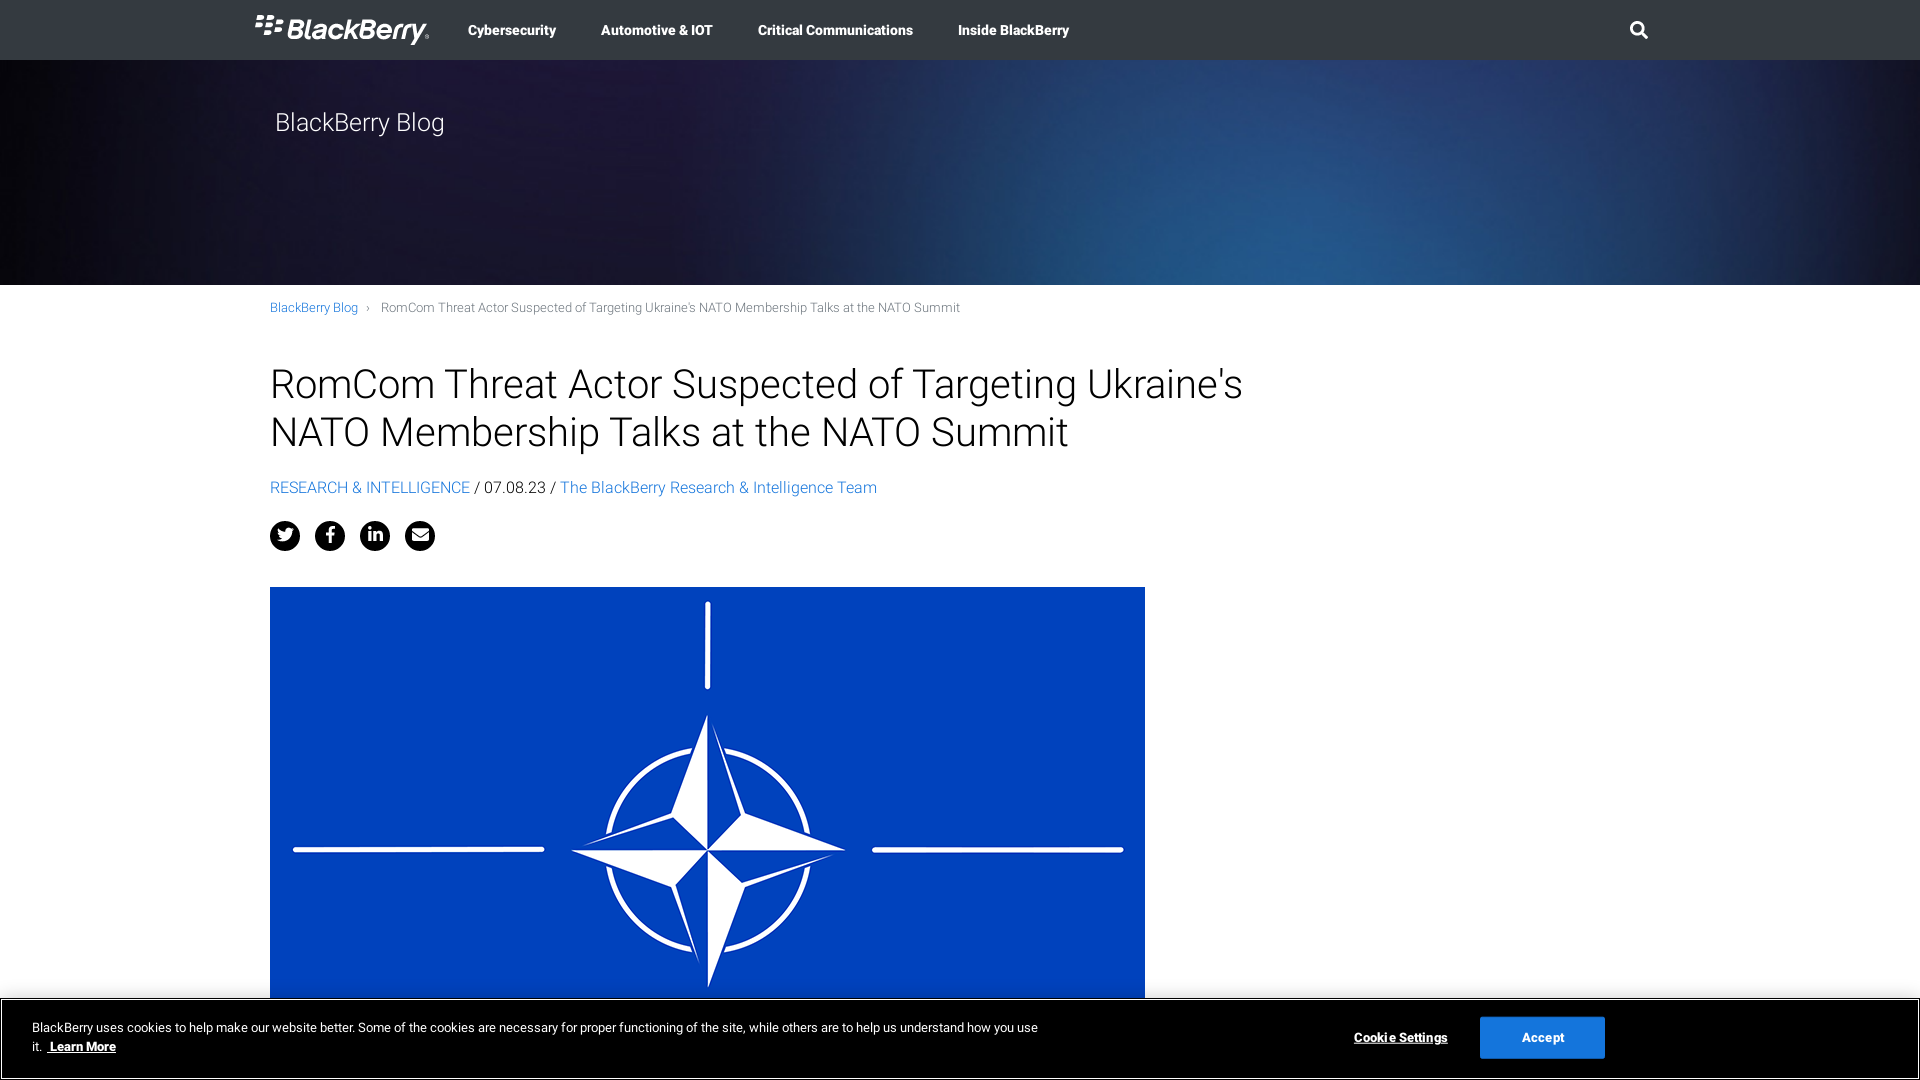 RomCom Threat Actor Suspected of Targeting Ukraine's NATO Membership Talks at the NATO Summit